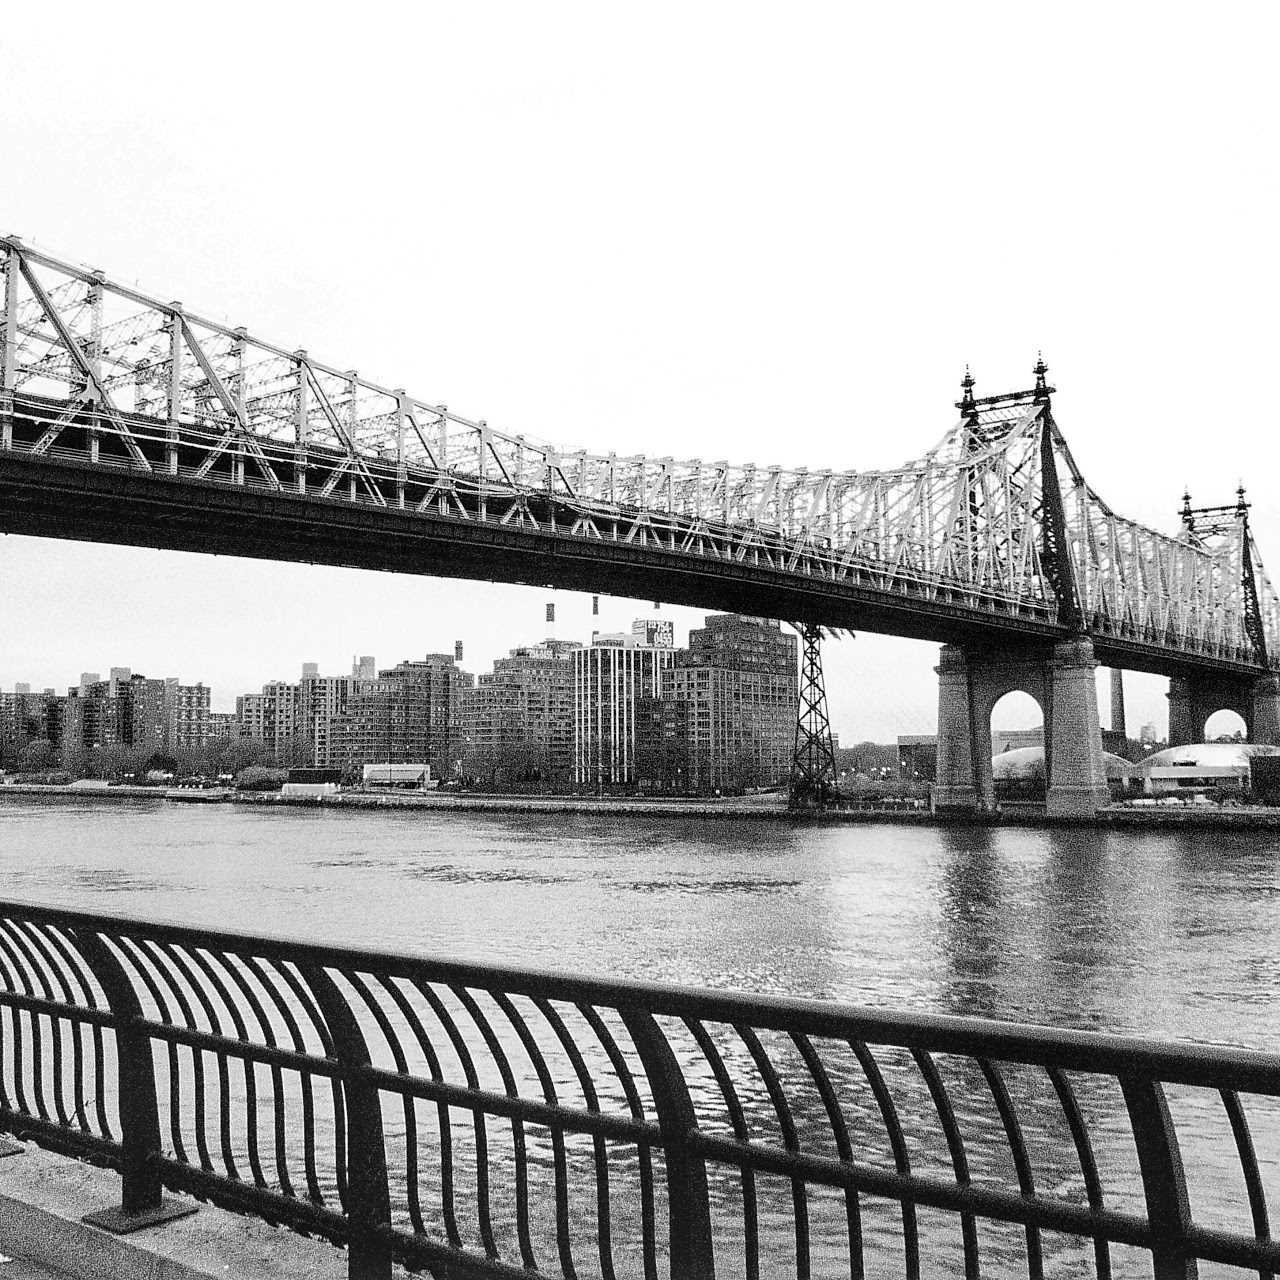 Black and white image of a bridge.